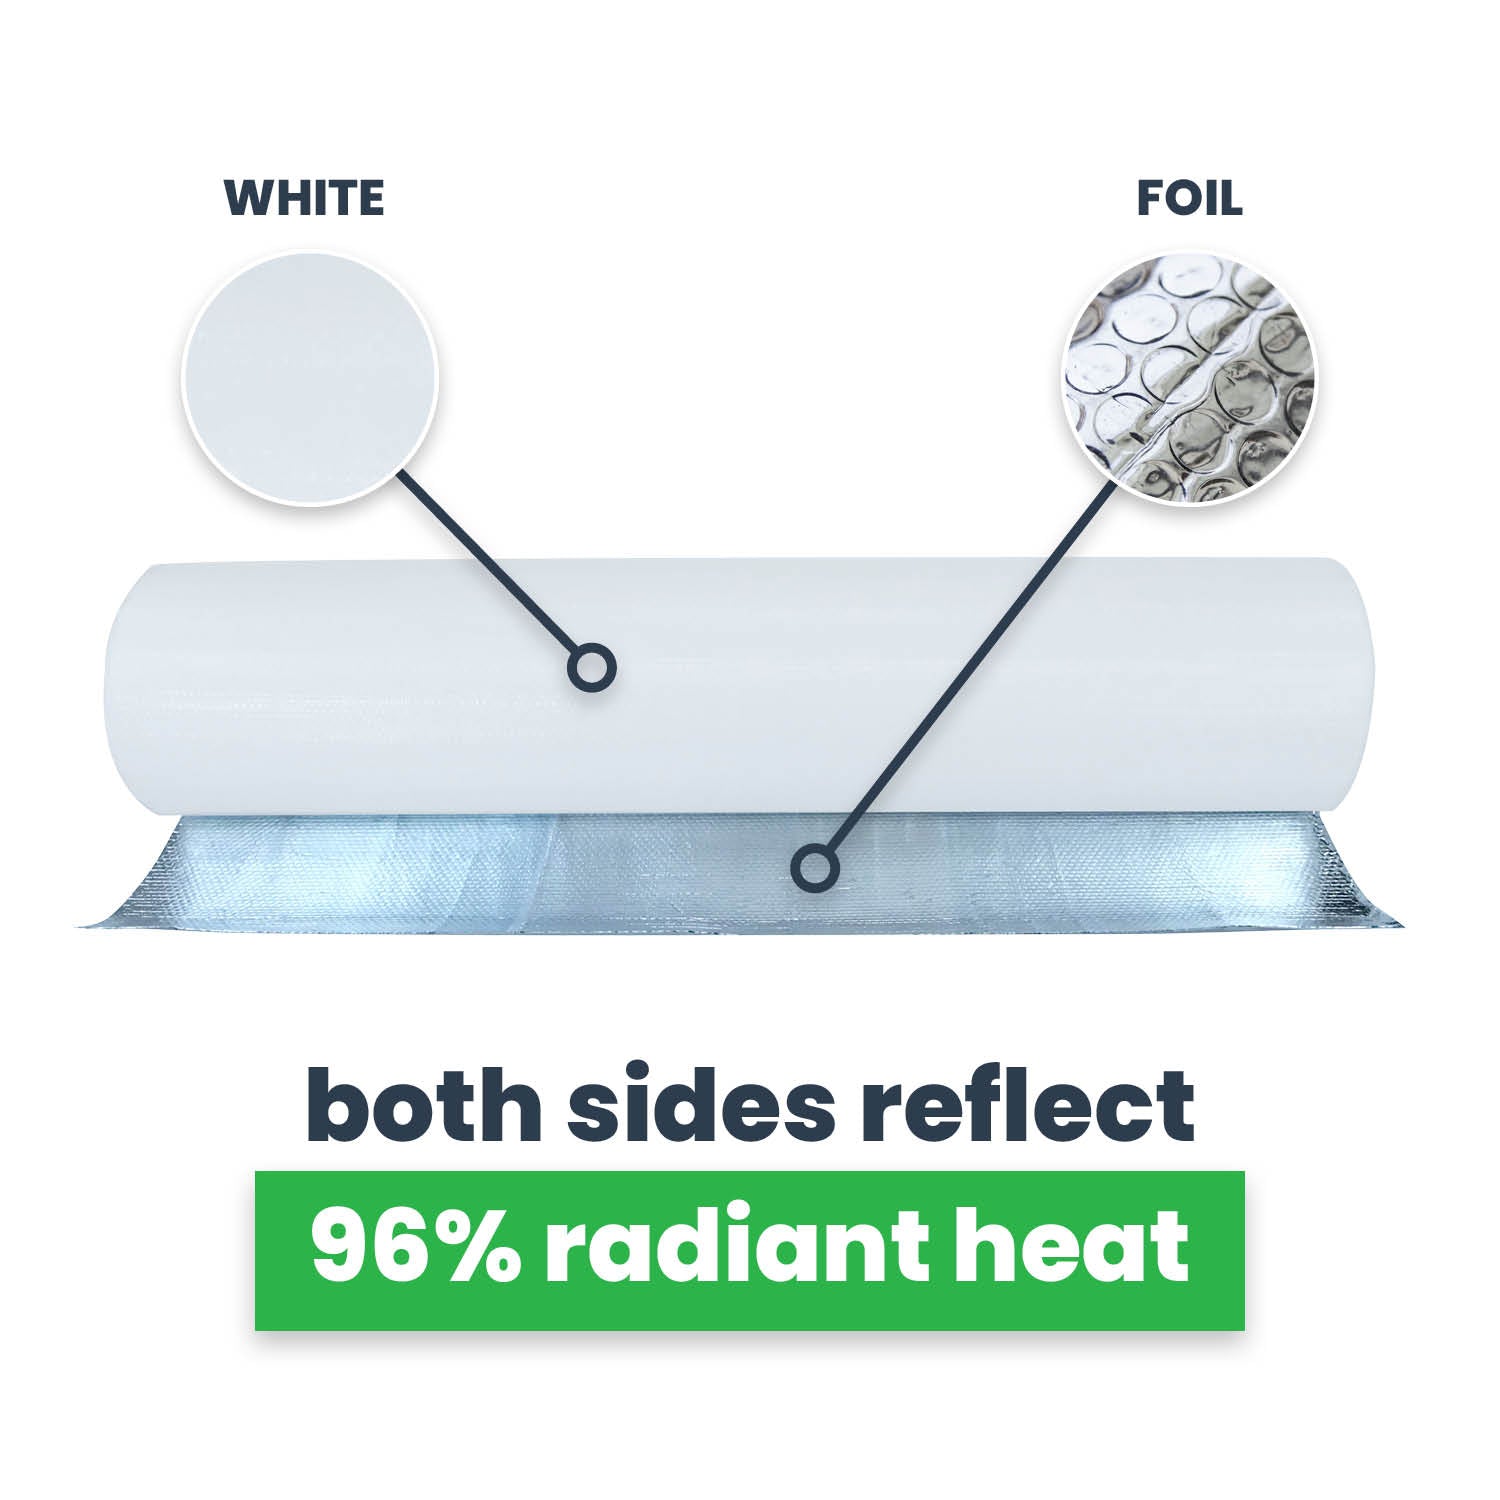 White/Foil, both sides reflect 96% radiant heat